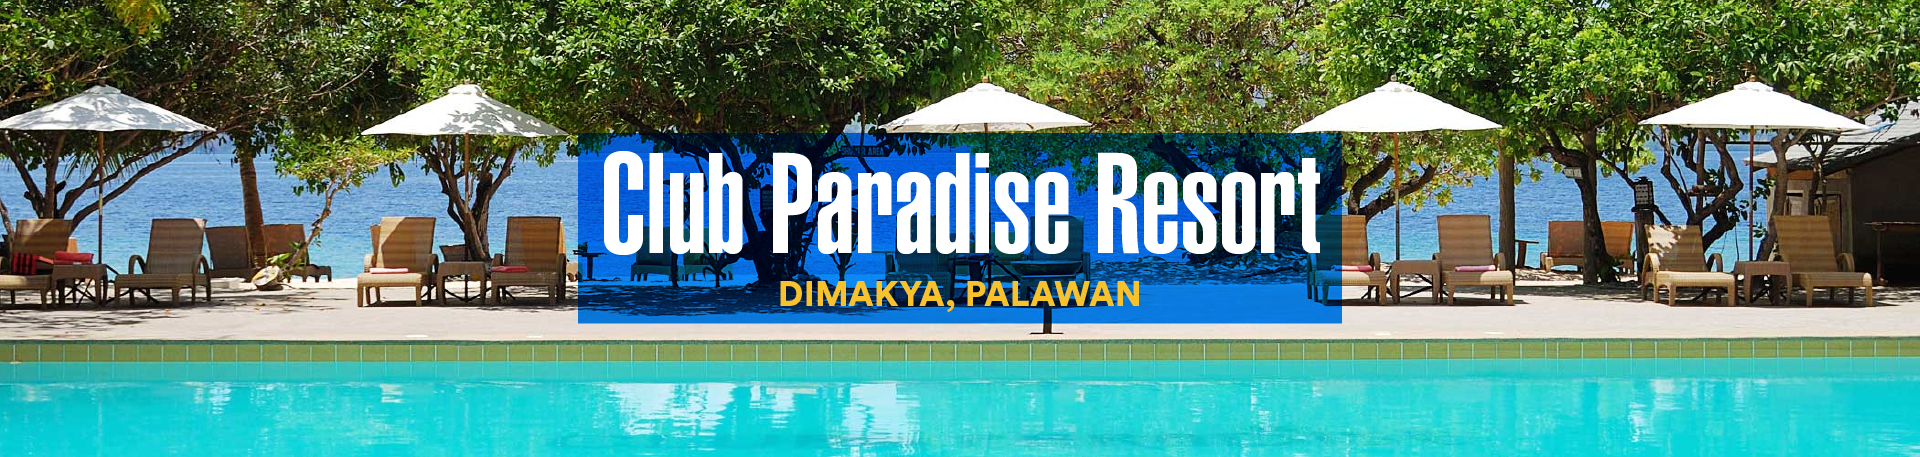 Club Paradise Resort, DImakya, Palawan